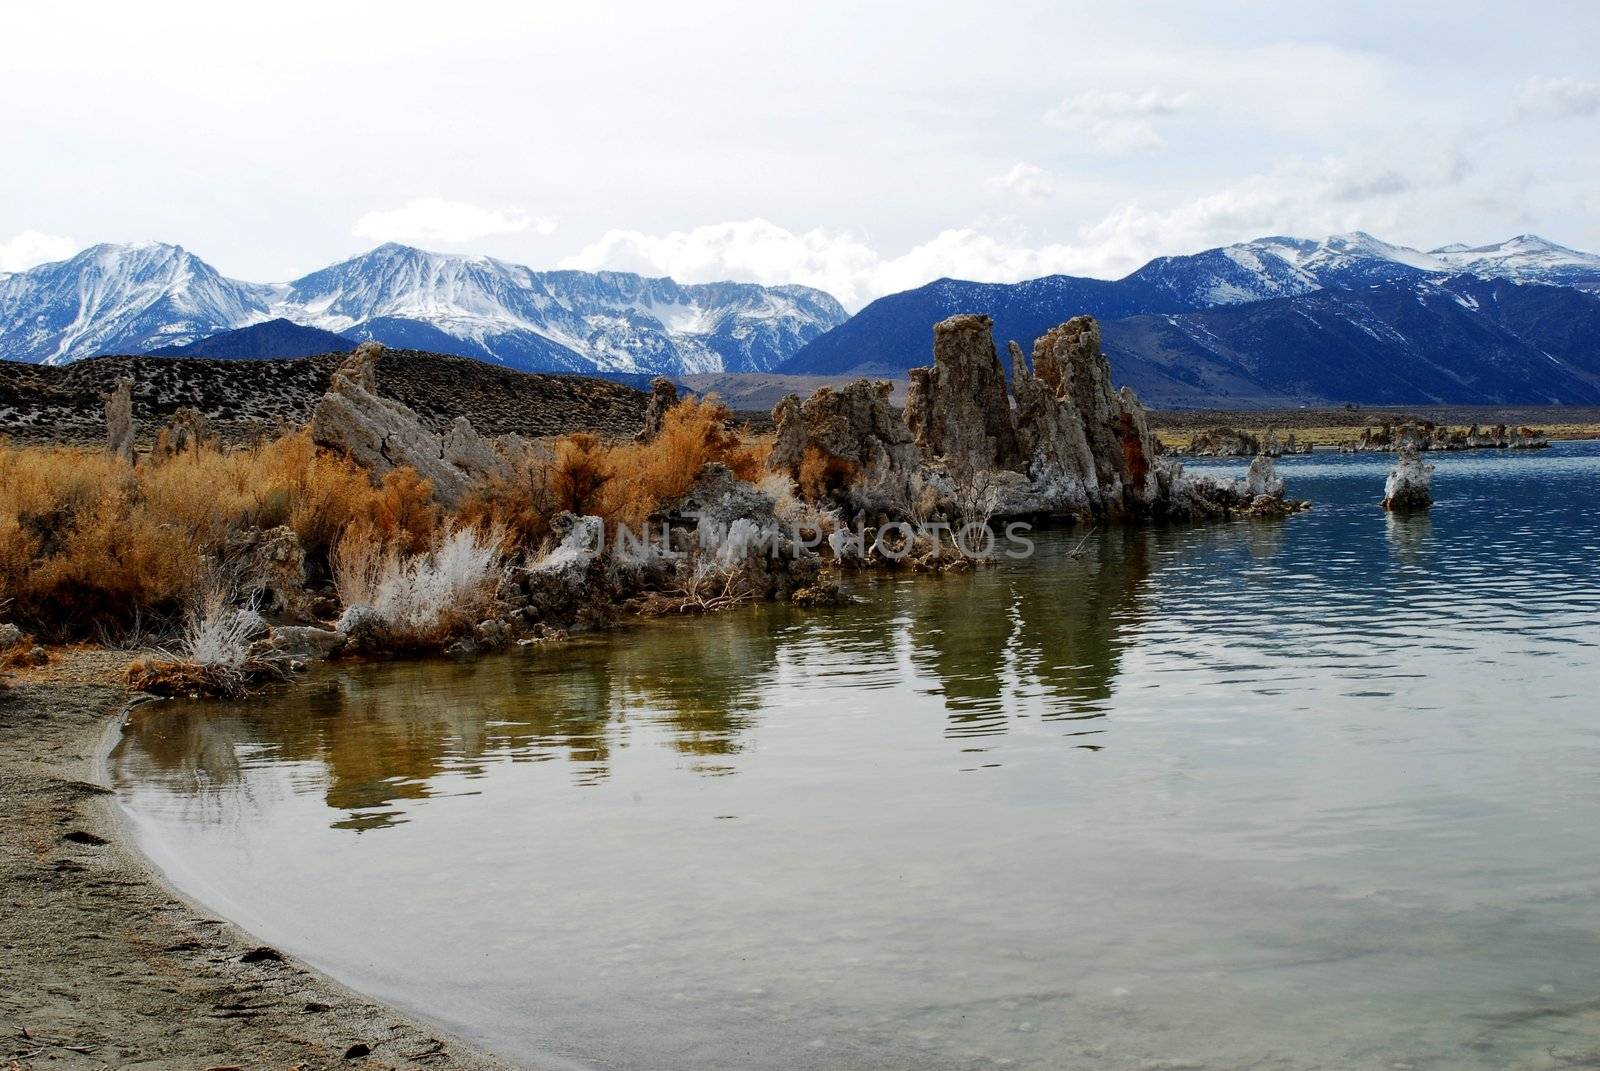 Tufas rocks made of calcium carbonate deposits at Mono Lake , California,USA